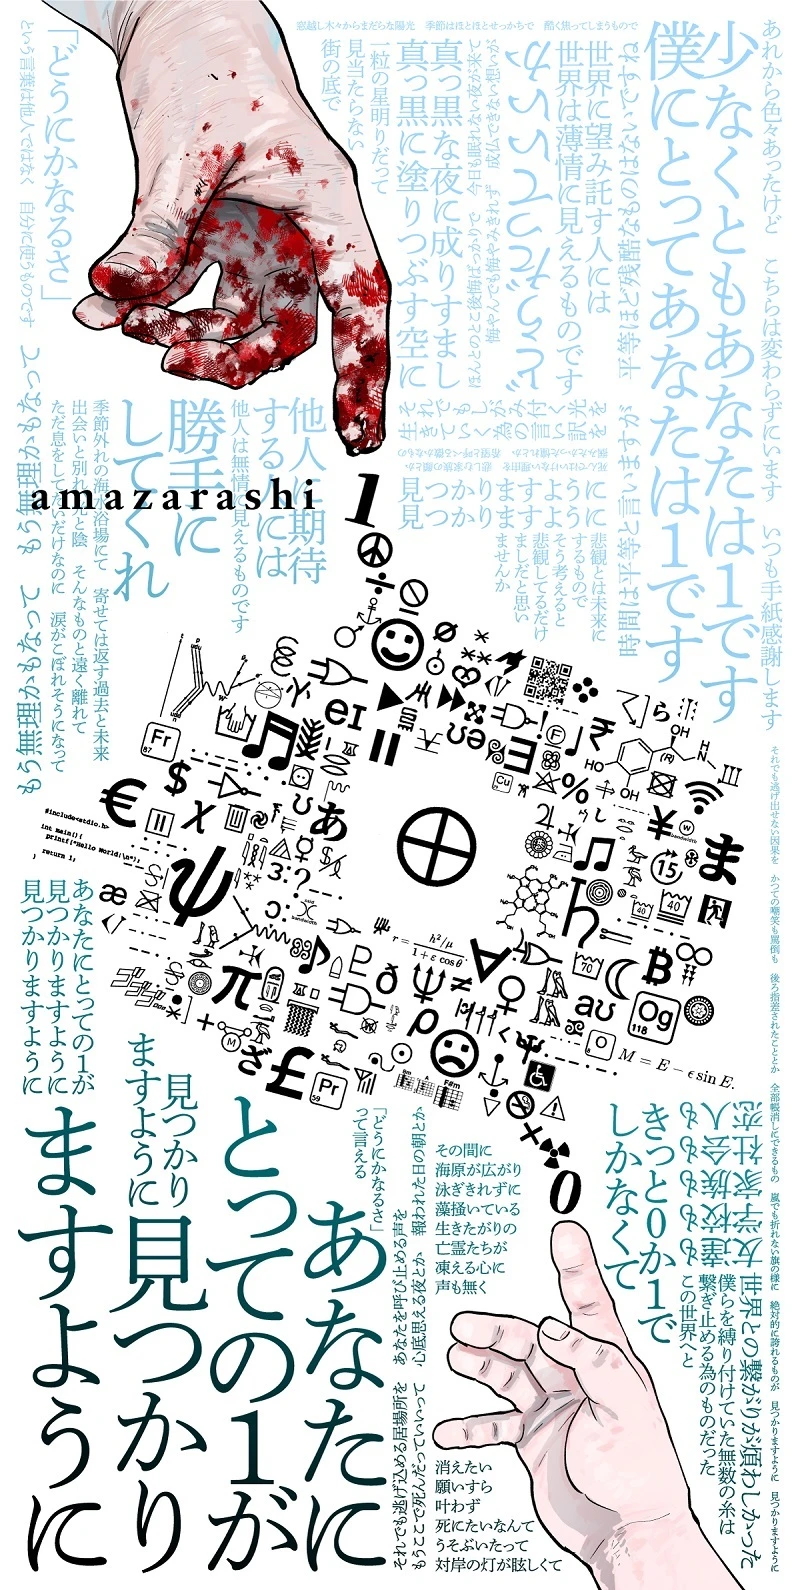 amazarashi、漫画『チ。』と往復プロジェクト　魚豊が曲をイラストで表現.jpg